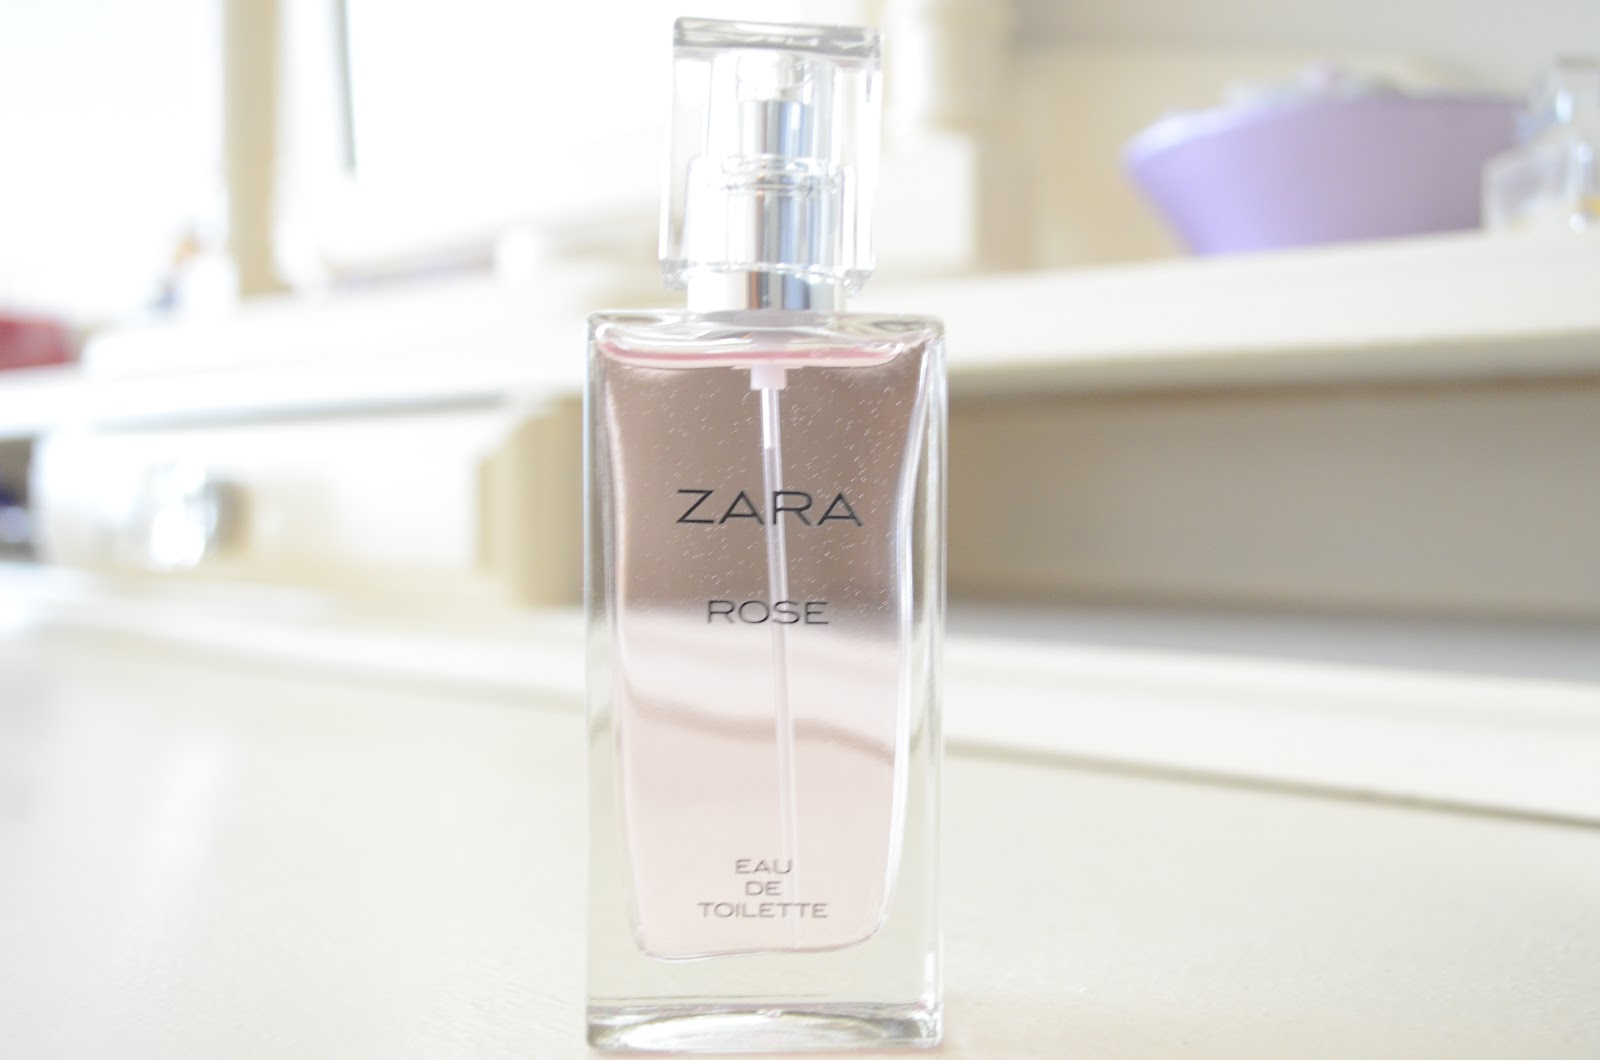 ... Beauty, Fashion and Lifestyle Blog: Perfume on a Budget: Zara Rose